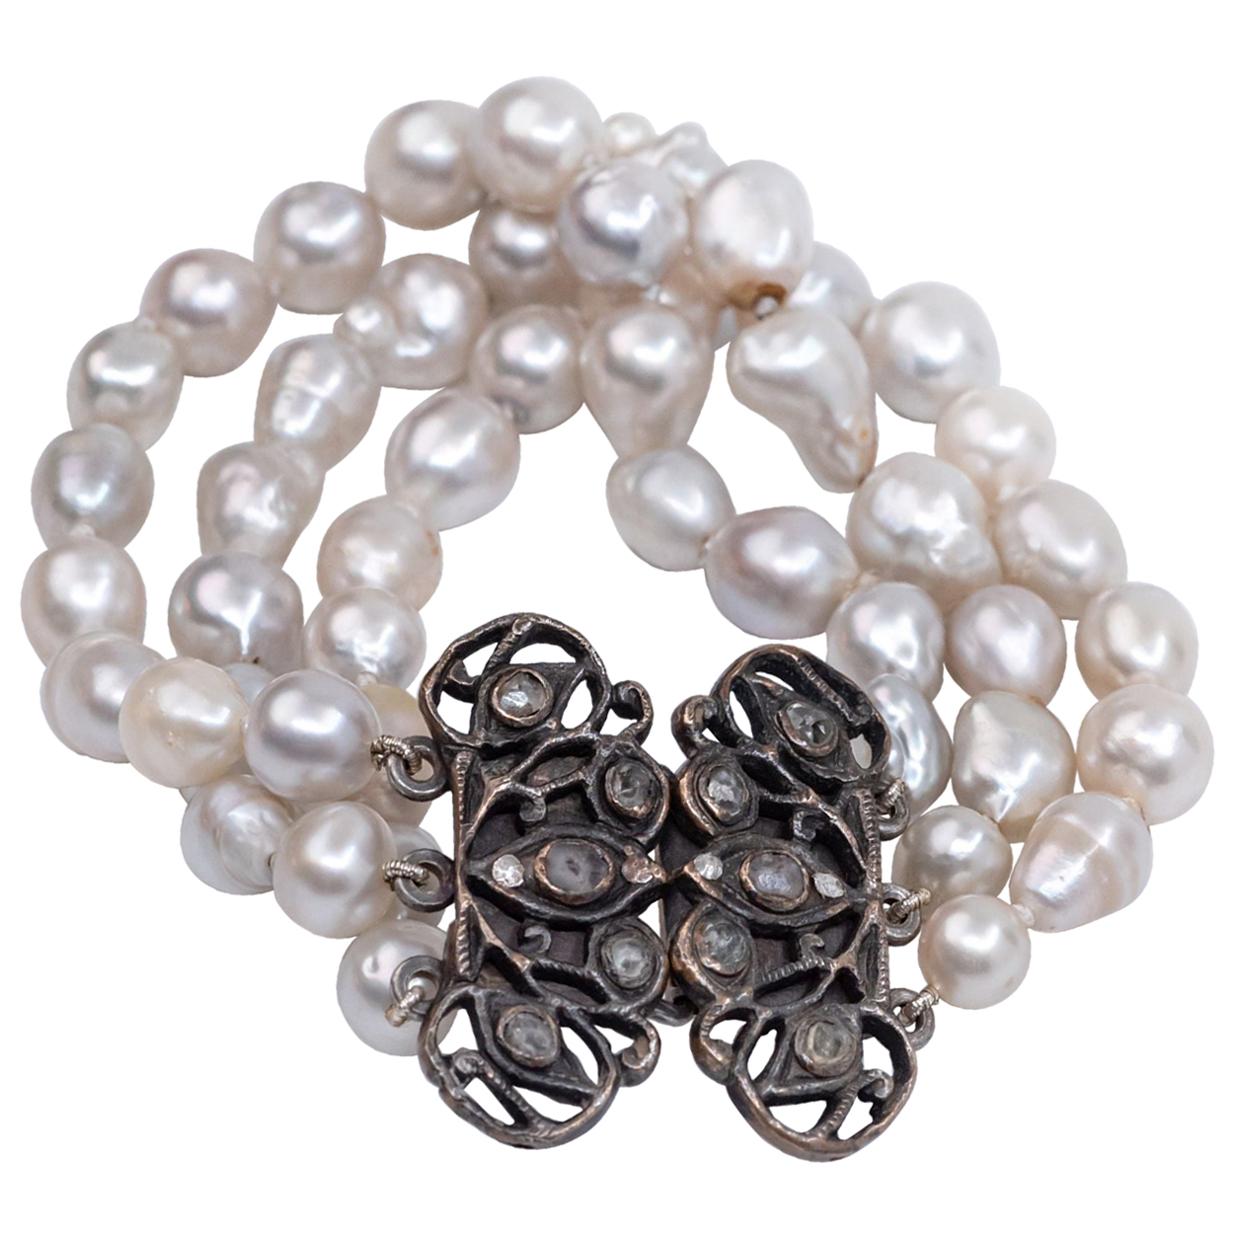 Nouveau Exquisite 14K OR MASSIF 4 mm & 5 mm Naturel cultured pearl beaded Bracelet